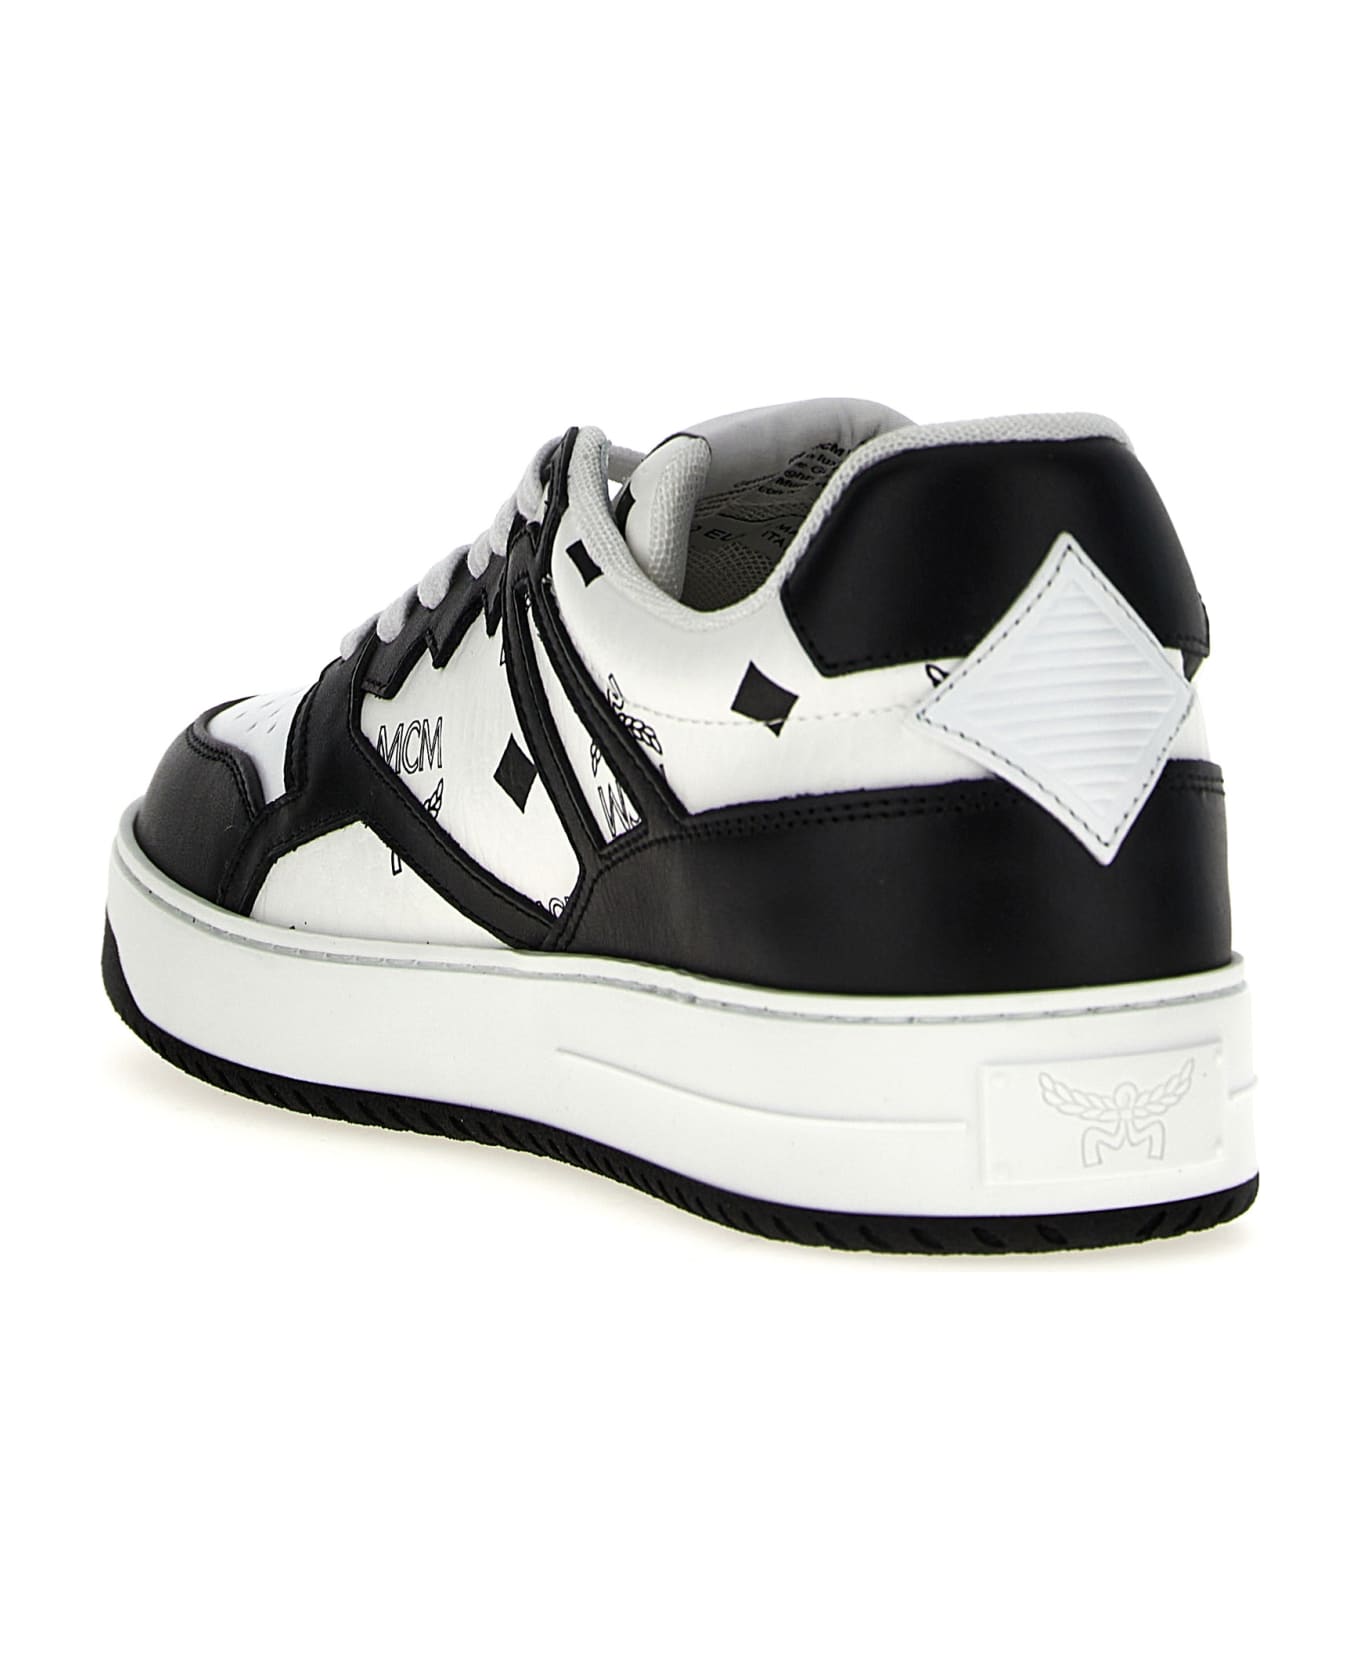 MCM 'neo Terrain' Sneakers - White/Black スニーカー